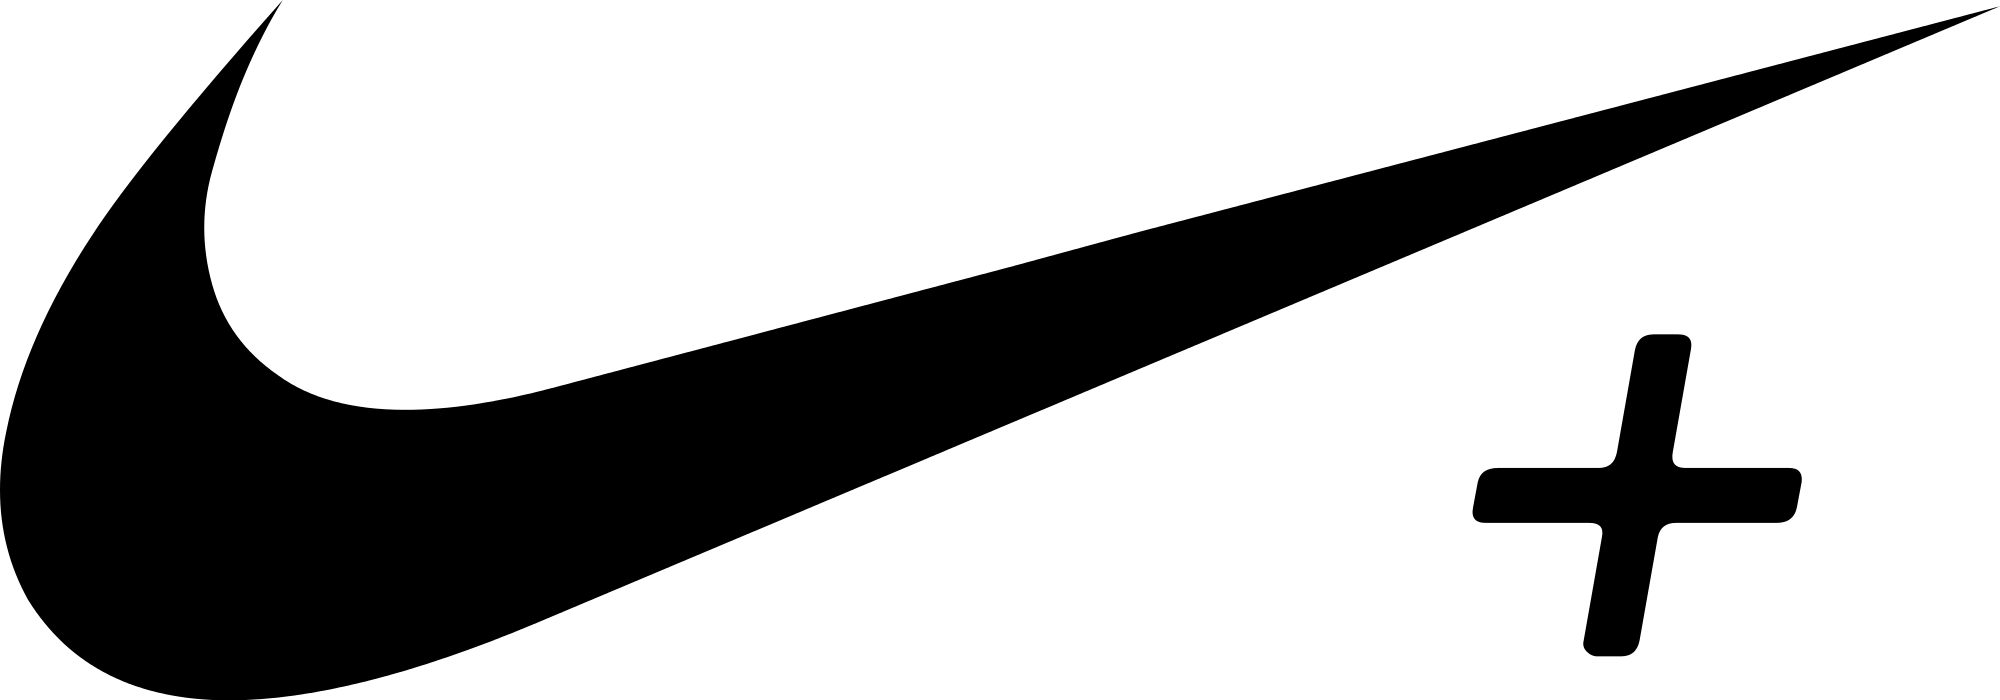 Download Swoosh Vector Transparent Nike Logo Svg Png Image With No Background Pngkey Com